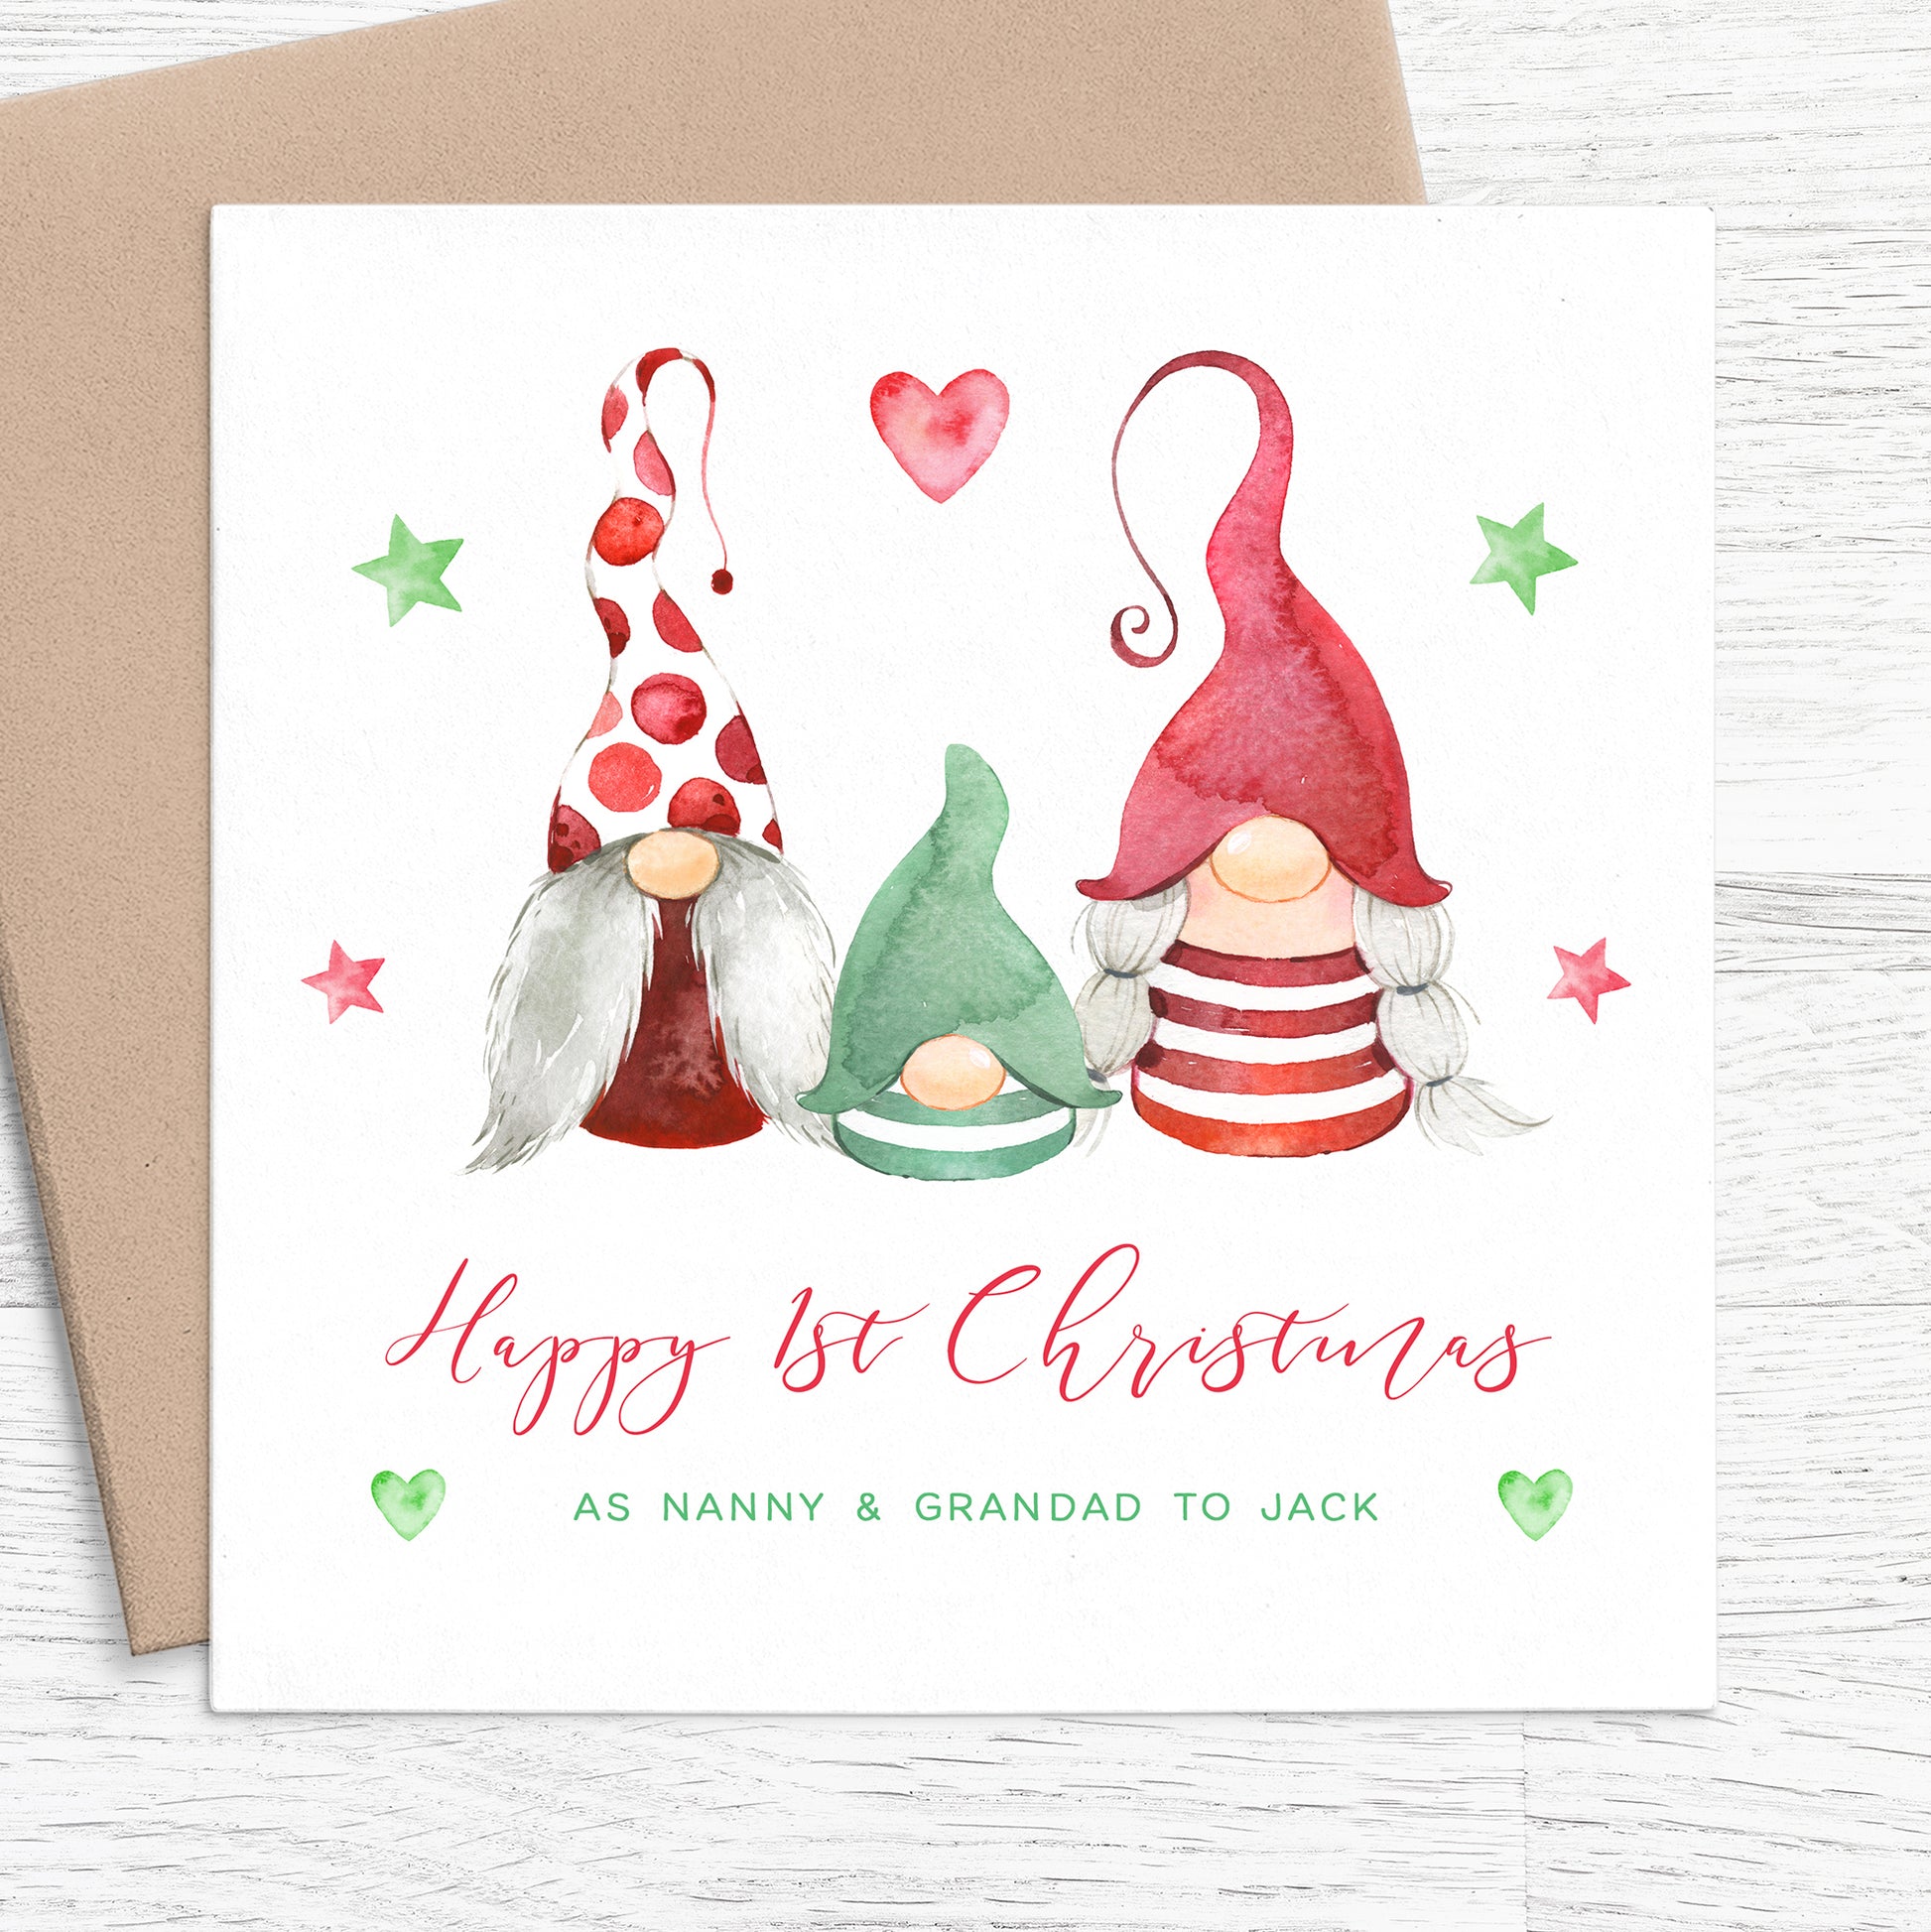 happy 1st christmas as nanny and grandad card personalised gnomes gonks kraft envelope matte white cardstock